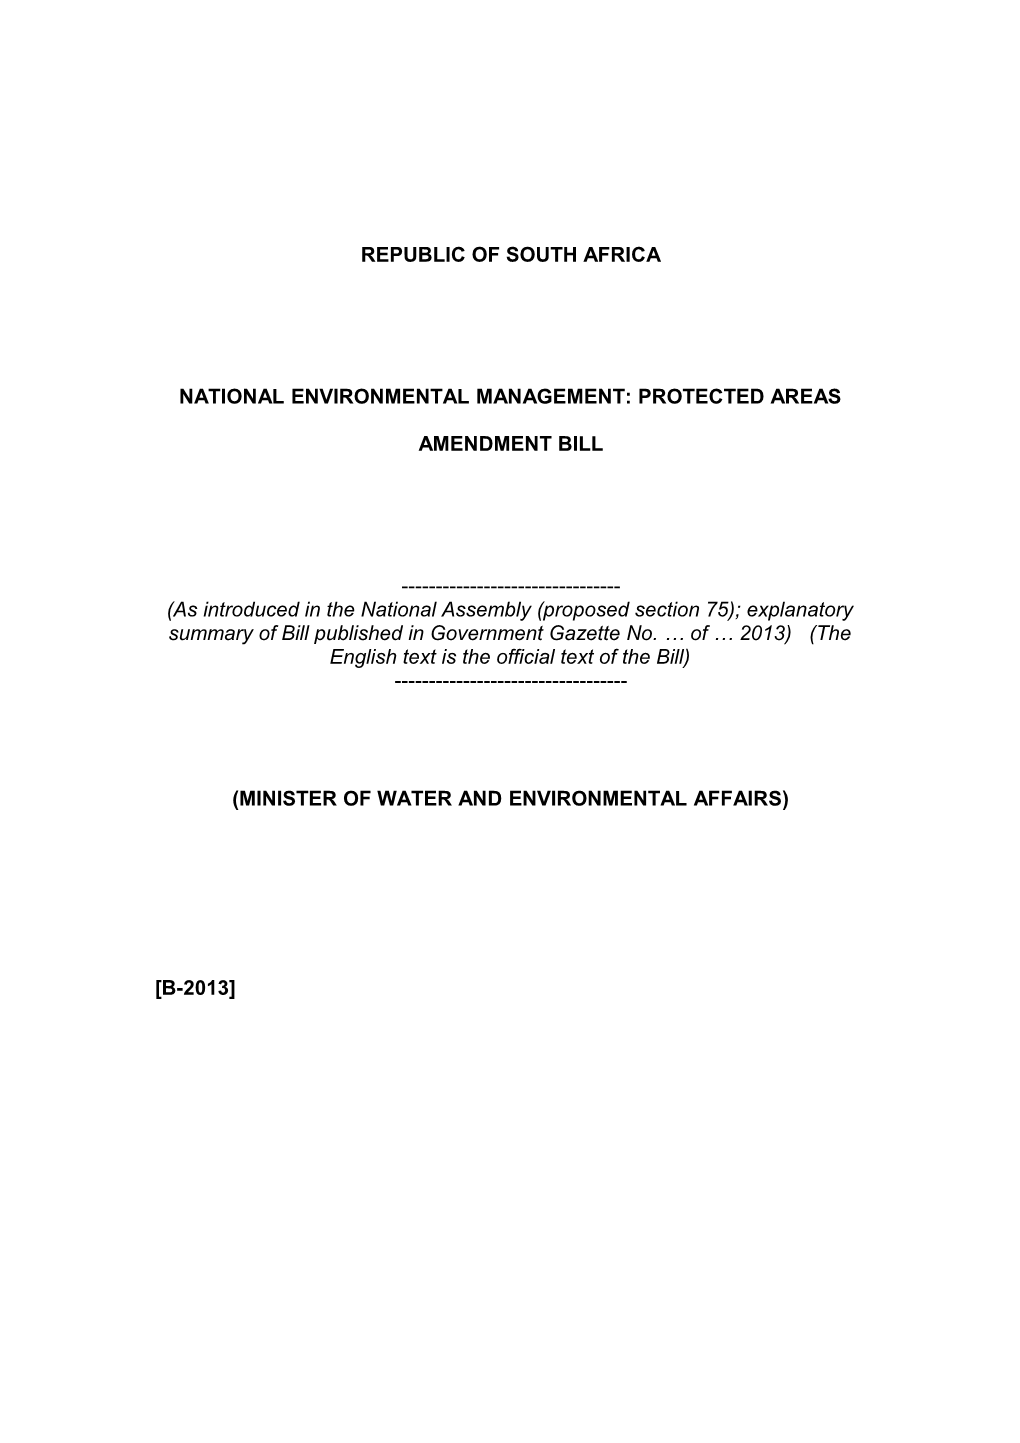 National Environmental Management: Protected Areas Amendment Bill